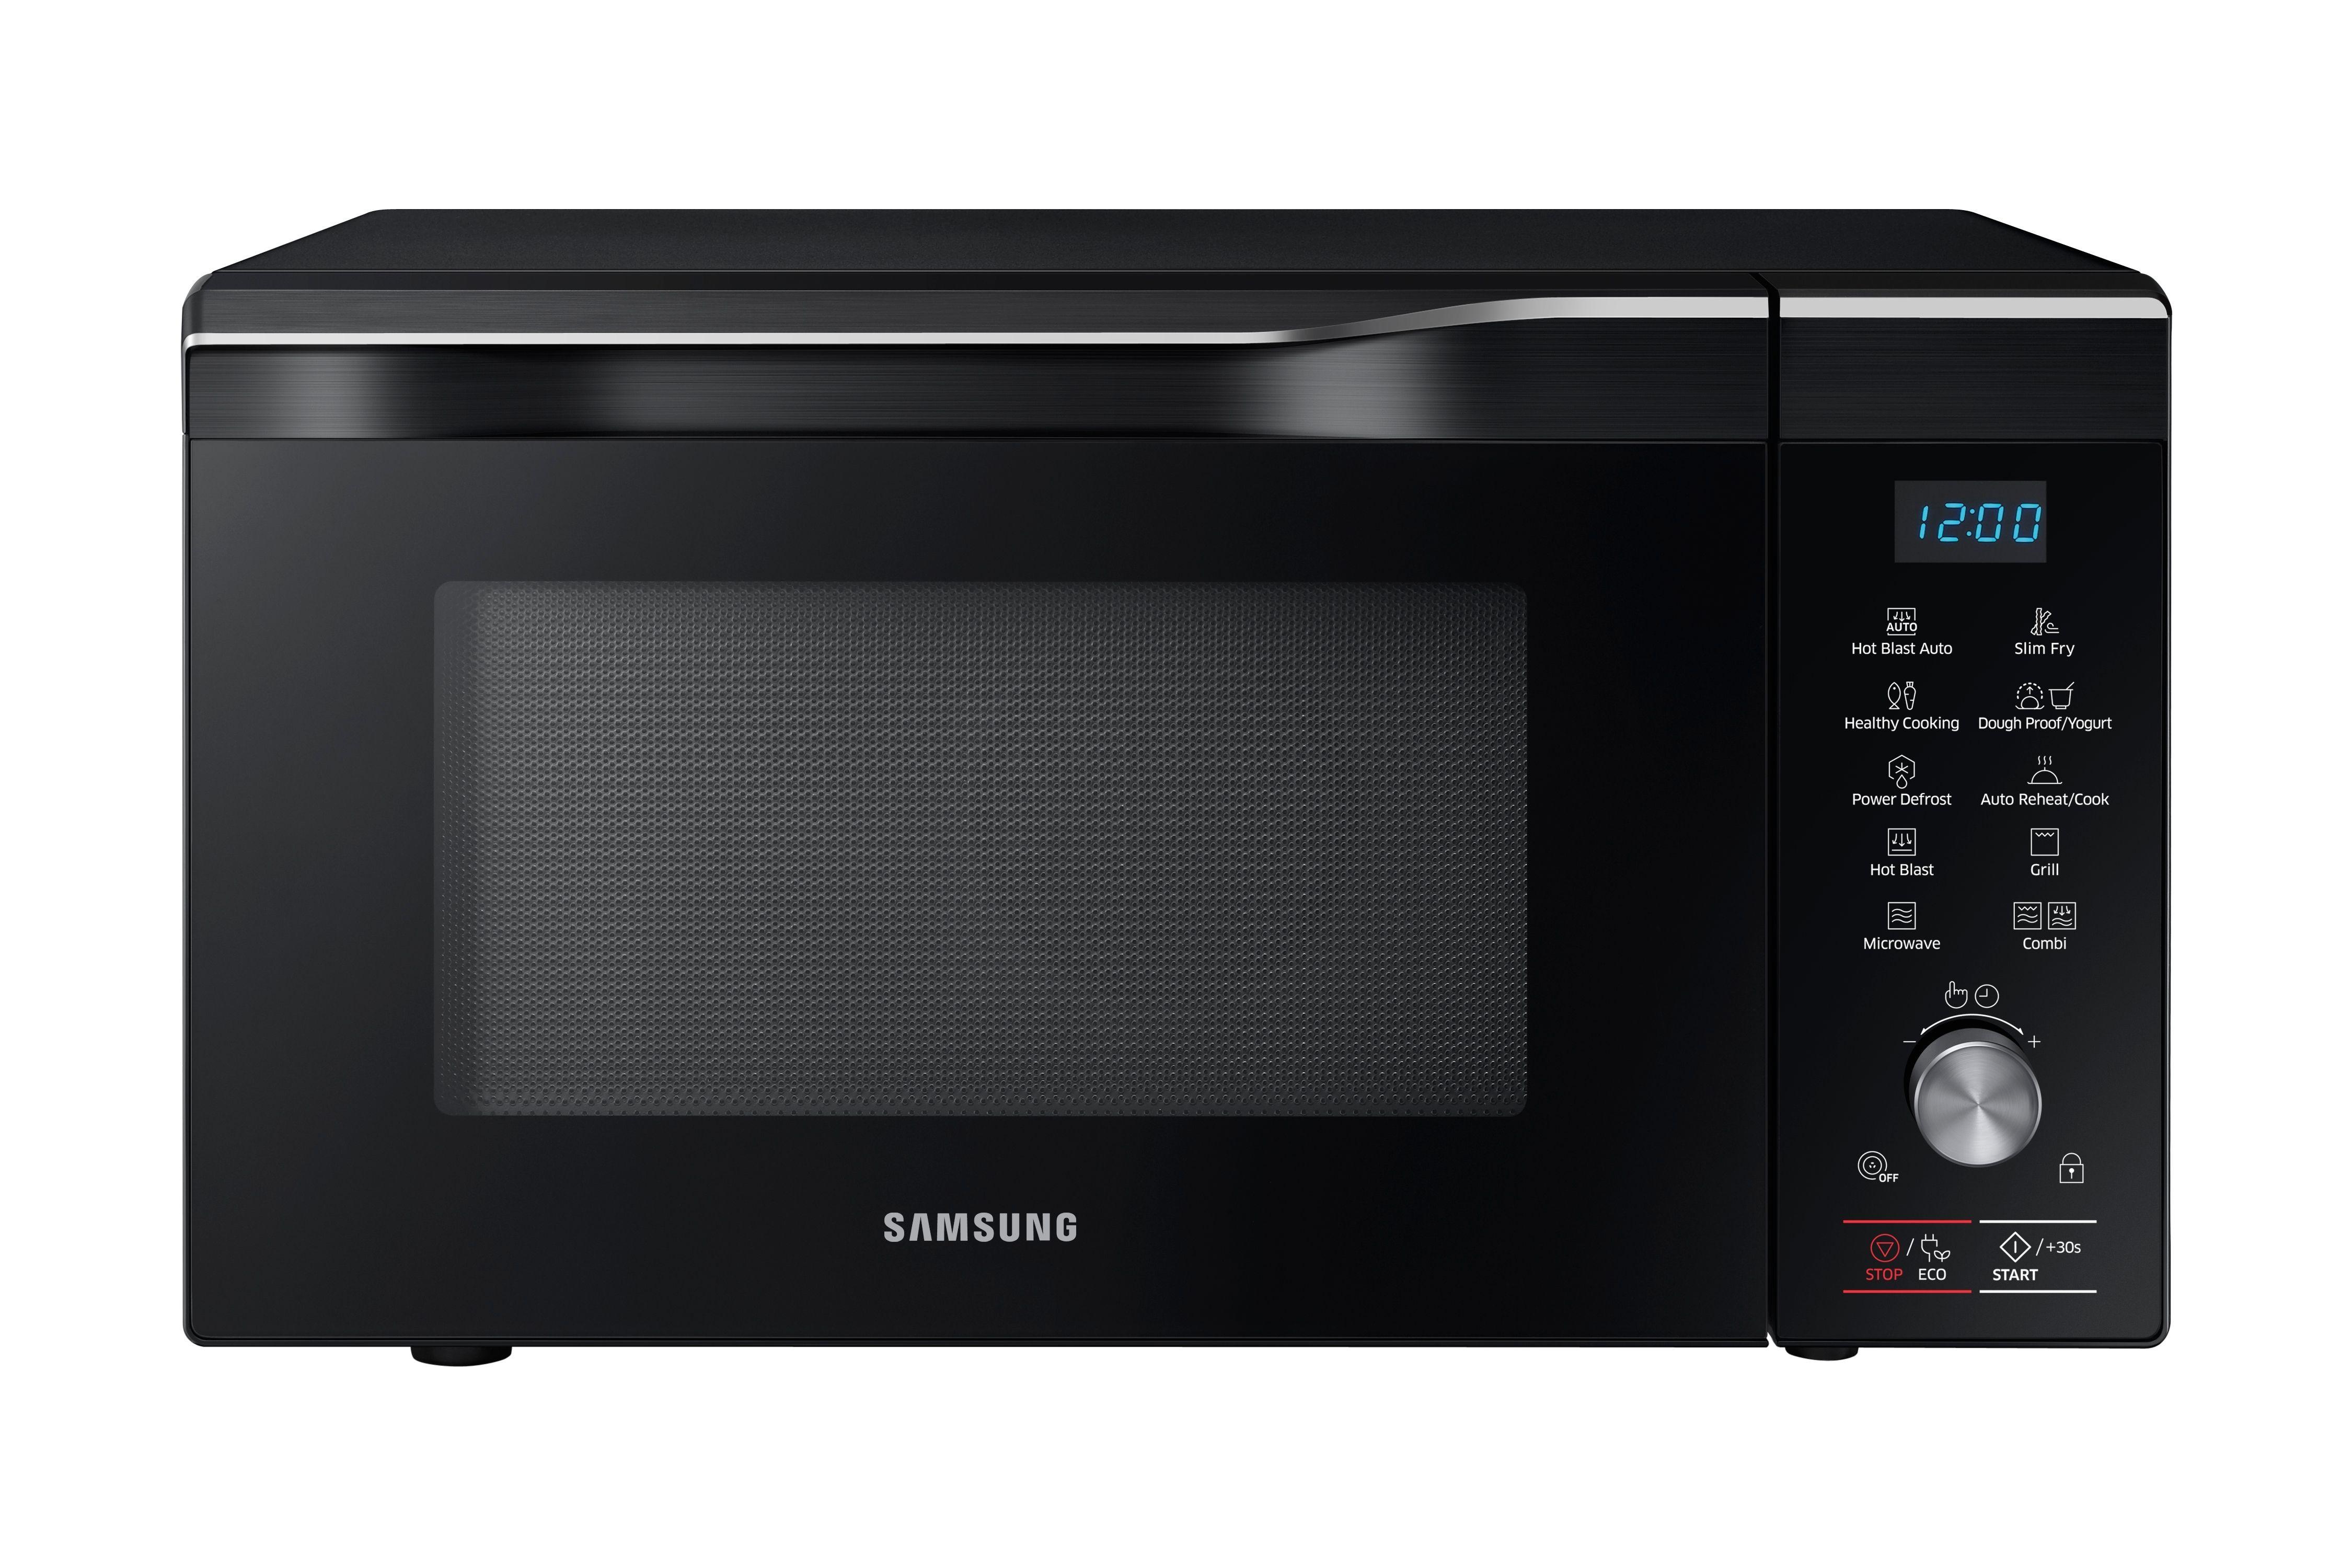 Samsung Appliance Logo - Home Appliances: Appliances for your Home | Samsung UK